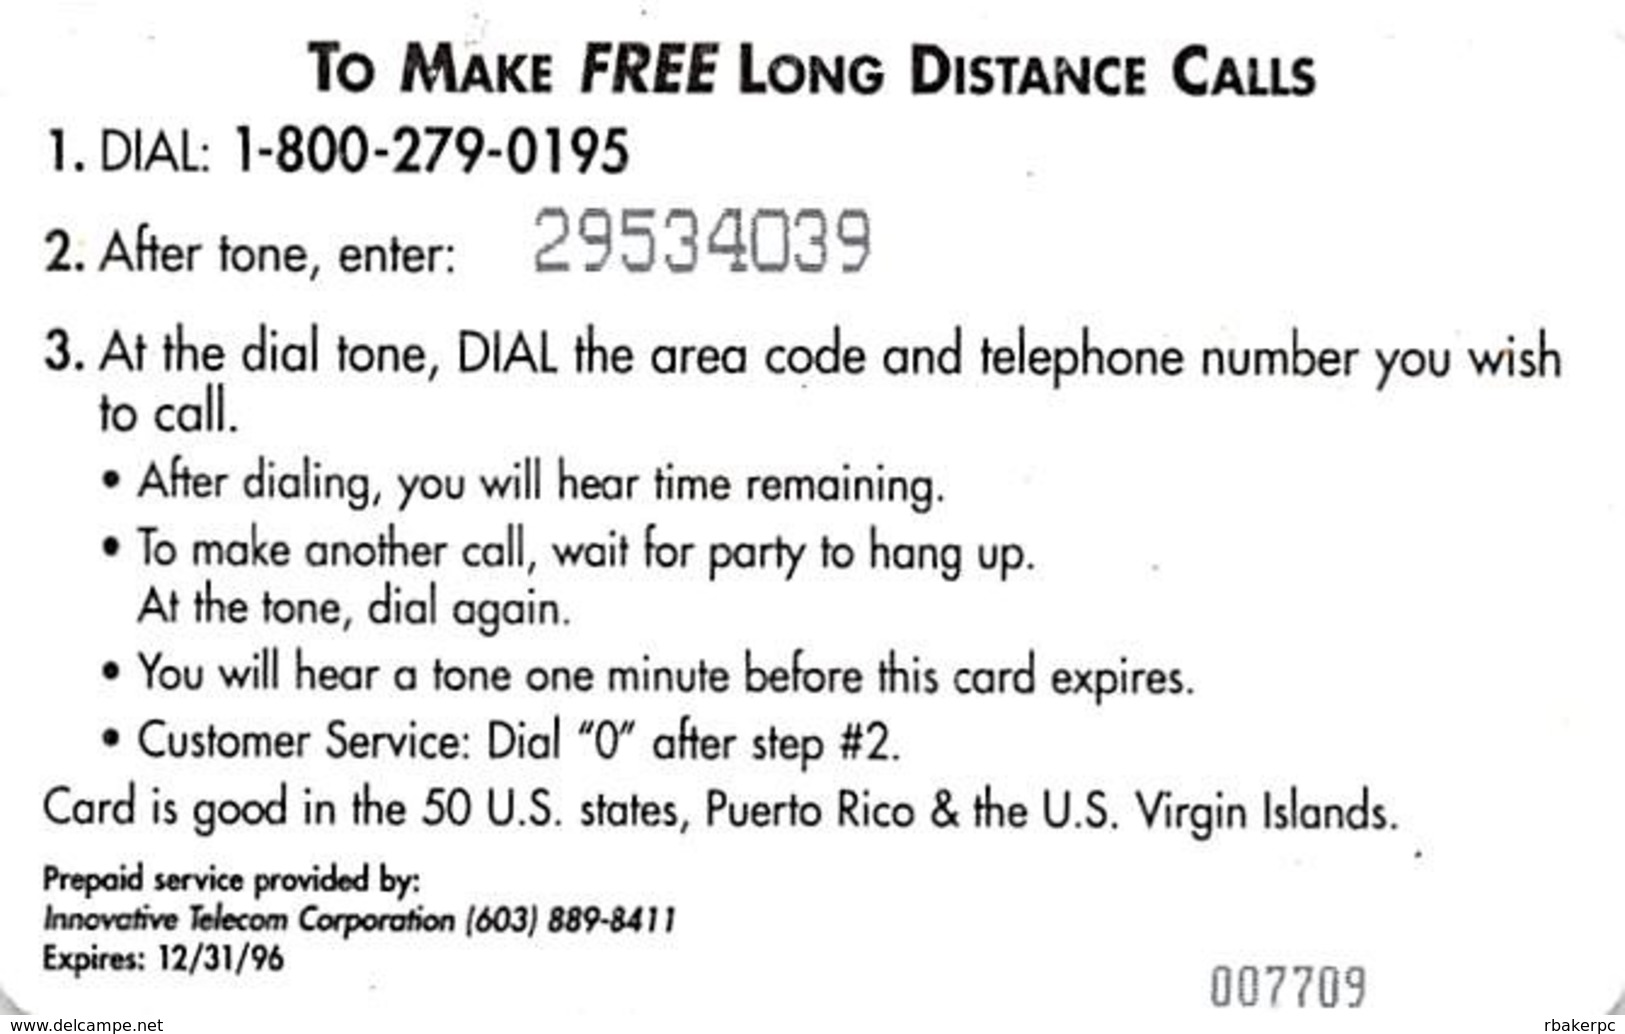 Promise Margarine Free Calling Card - Advertising